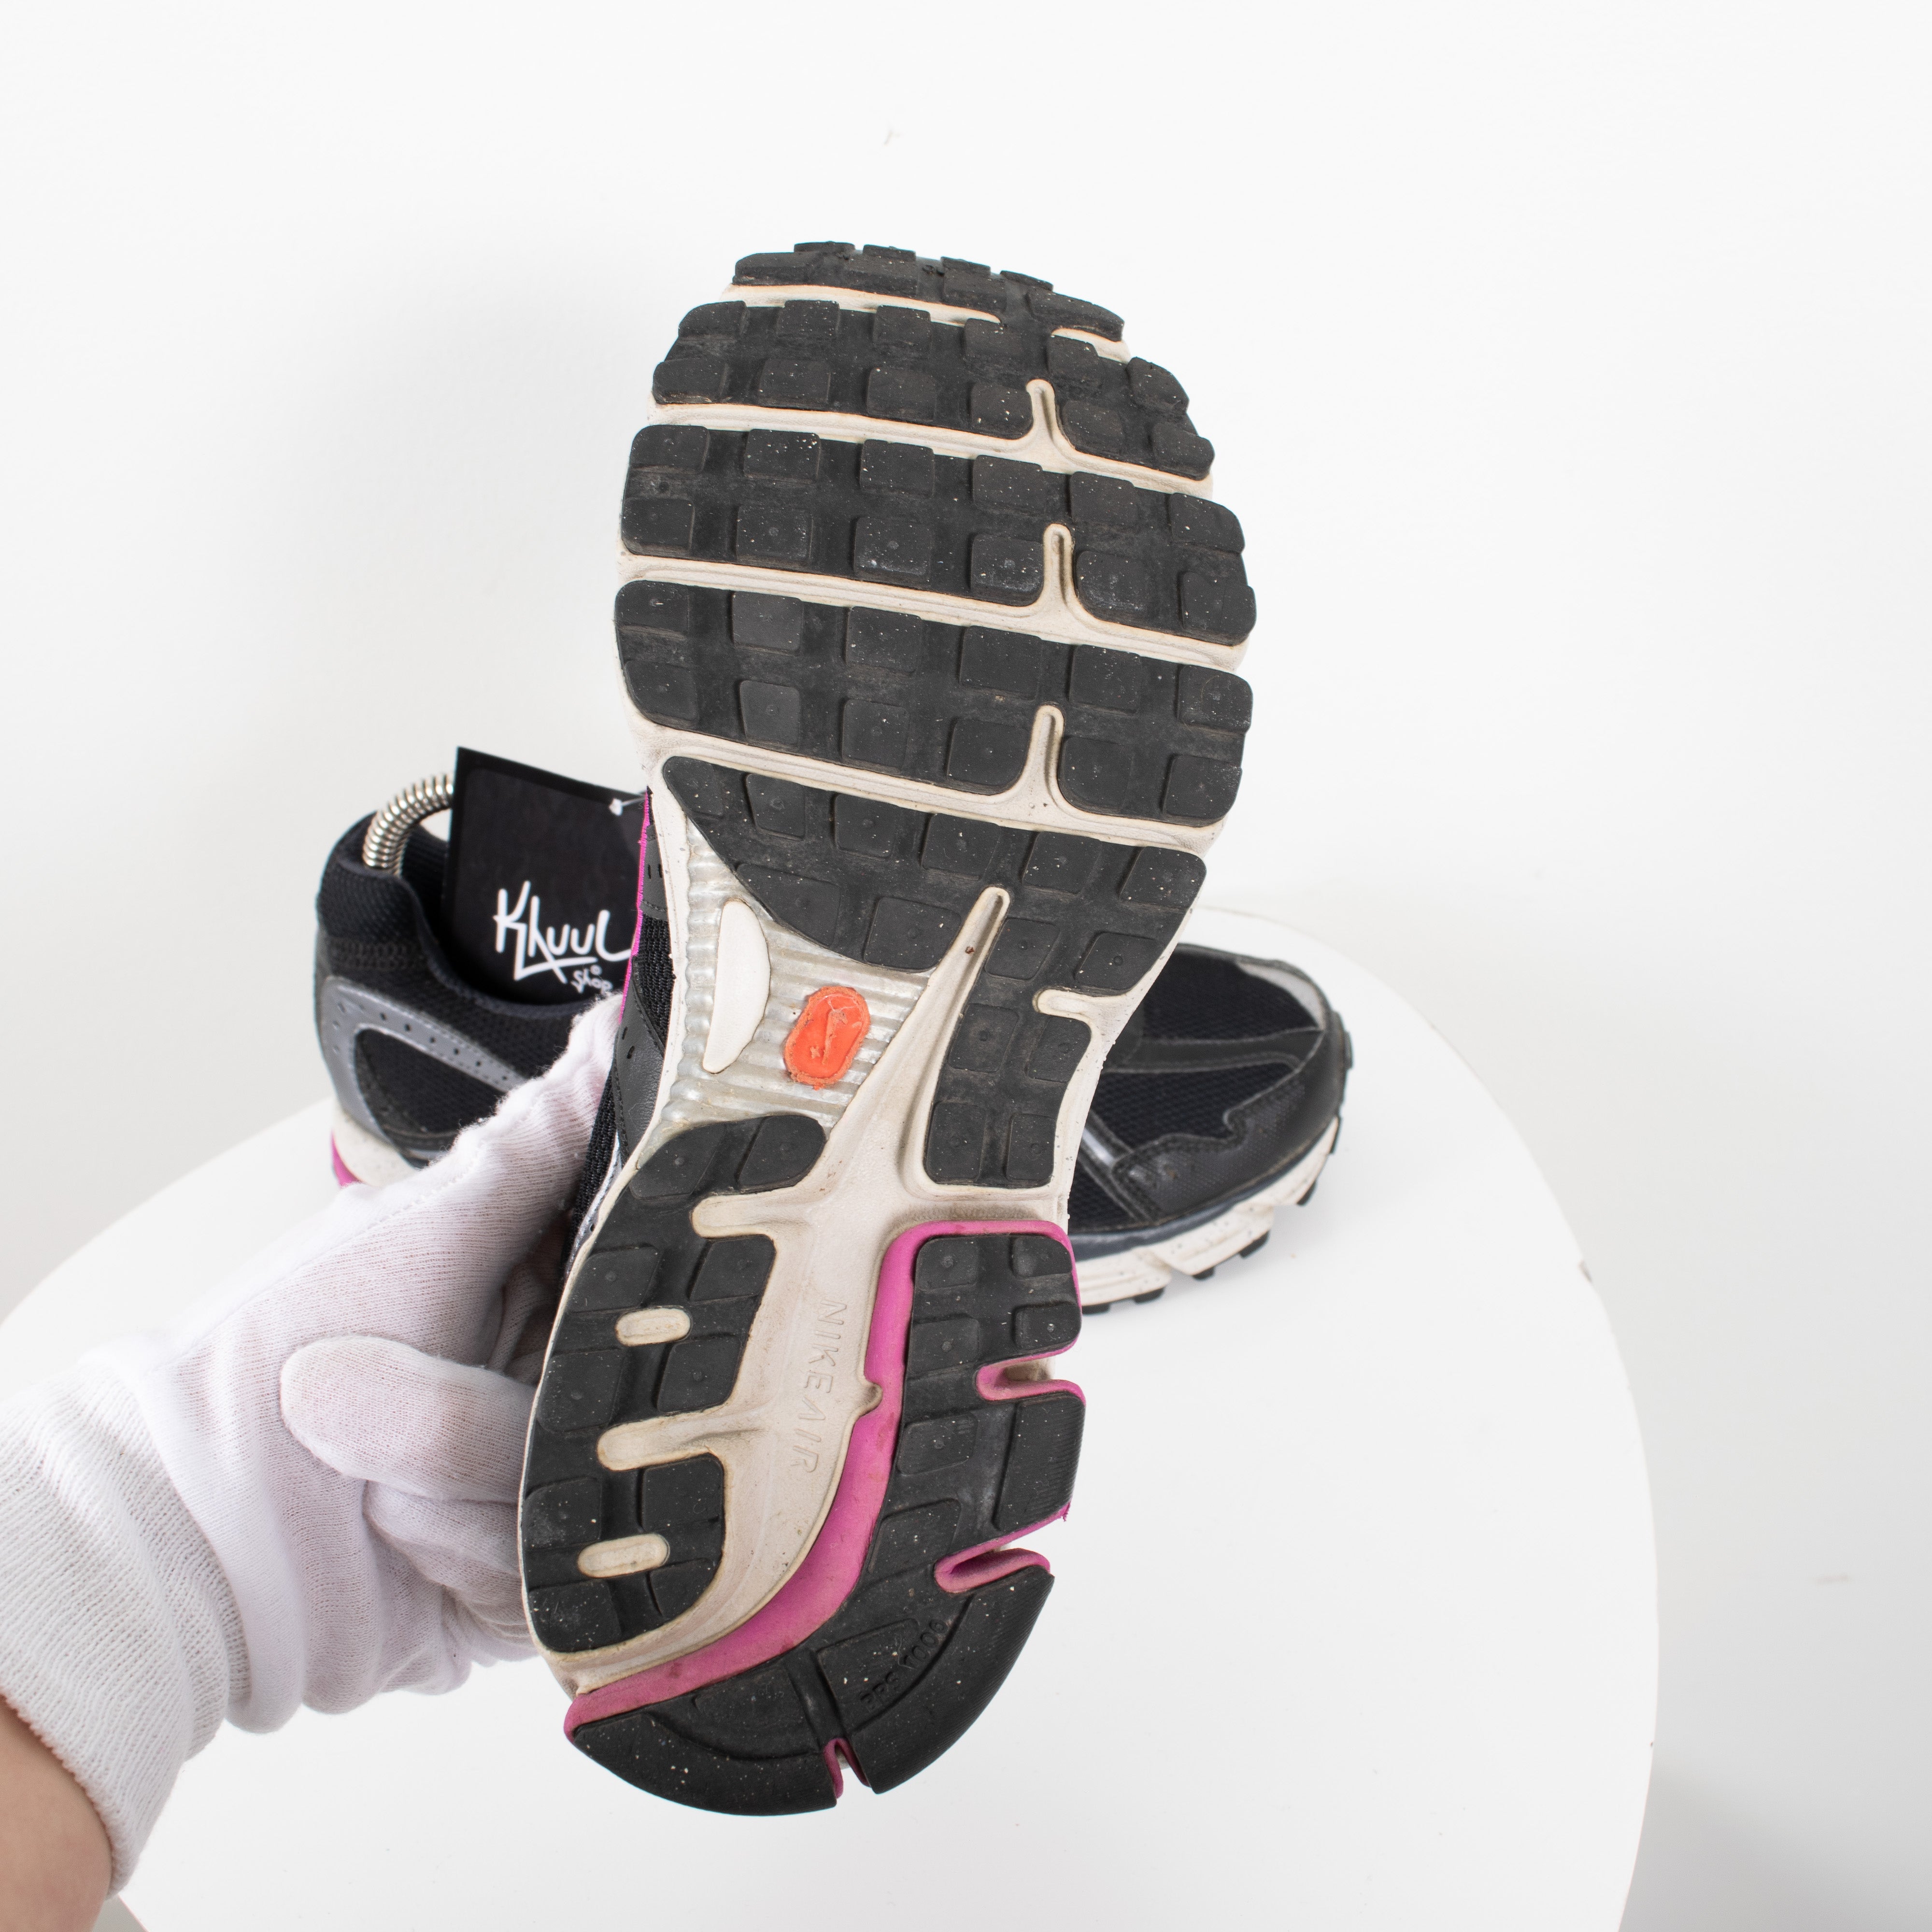 Nike Pegasus 26 Core-Tex Purple Detail Black Sneakers Women's EU38